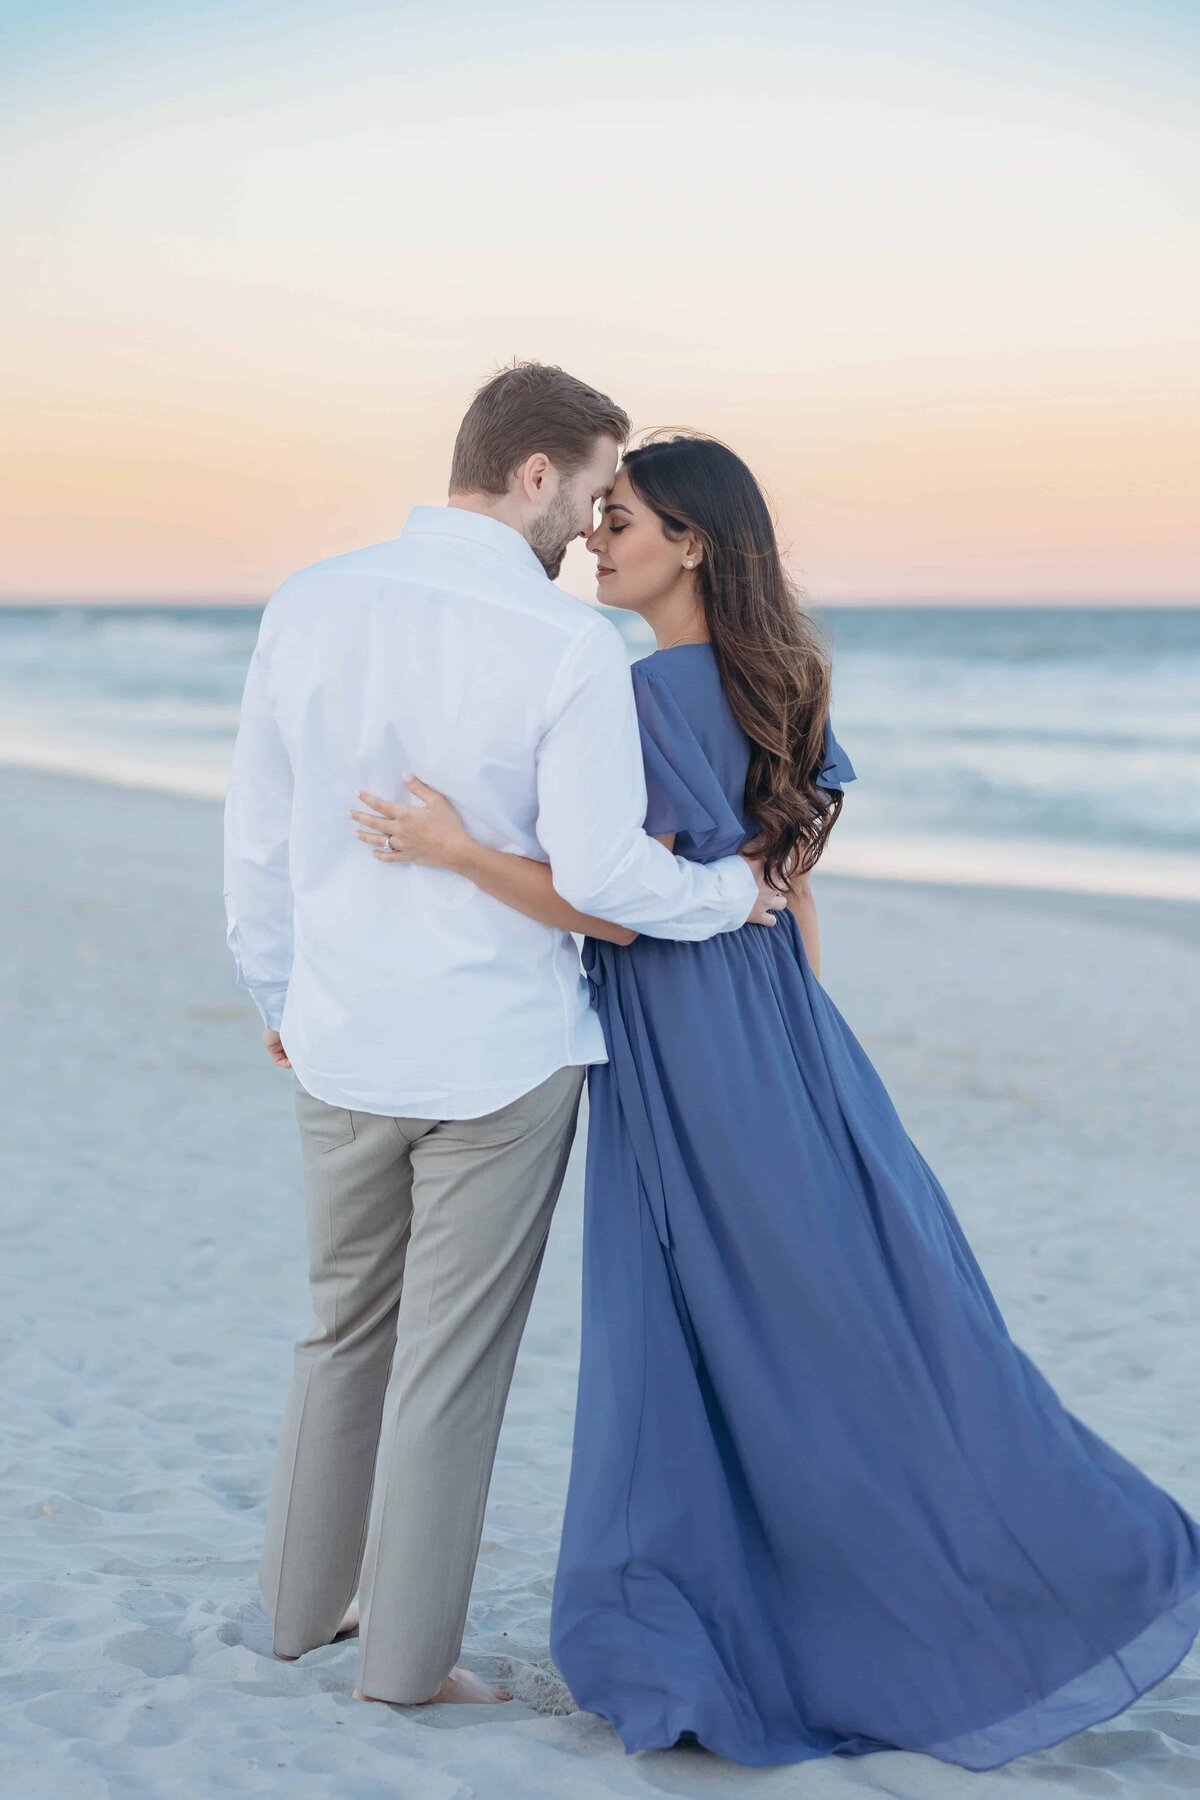 Beach Engagement Photos | Jacksonville Beach Engagement | Phavy Photography - Wedding Photographers Jacksonville Florida